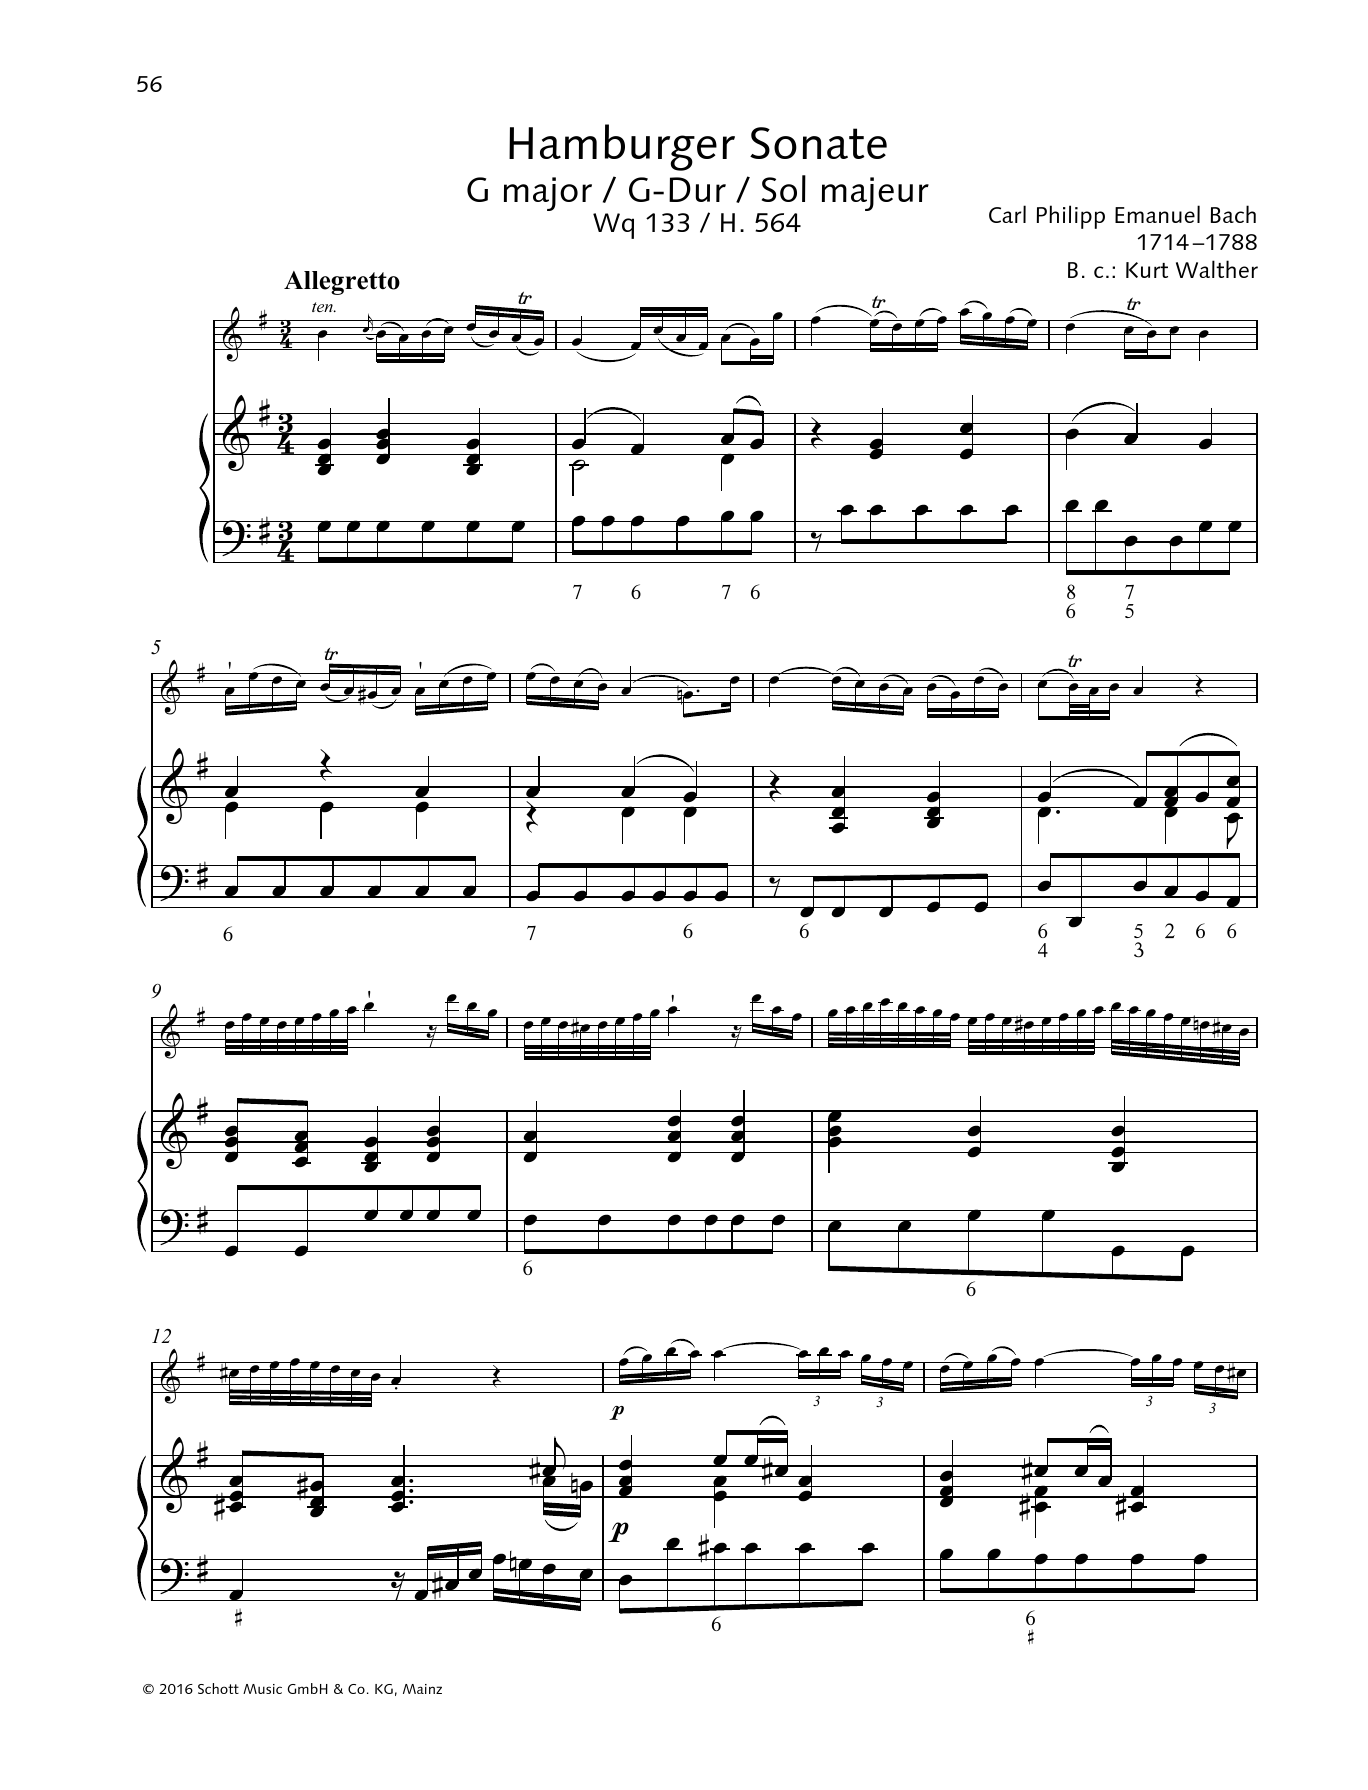 Download Carl Philipp Emanuel Bach Hamburger Sonate Sheet Music